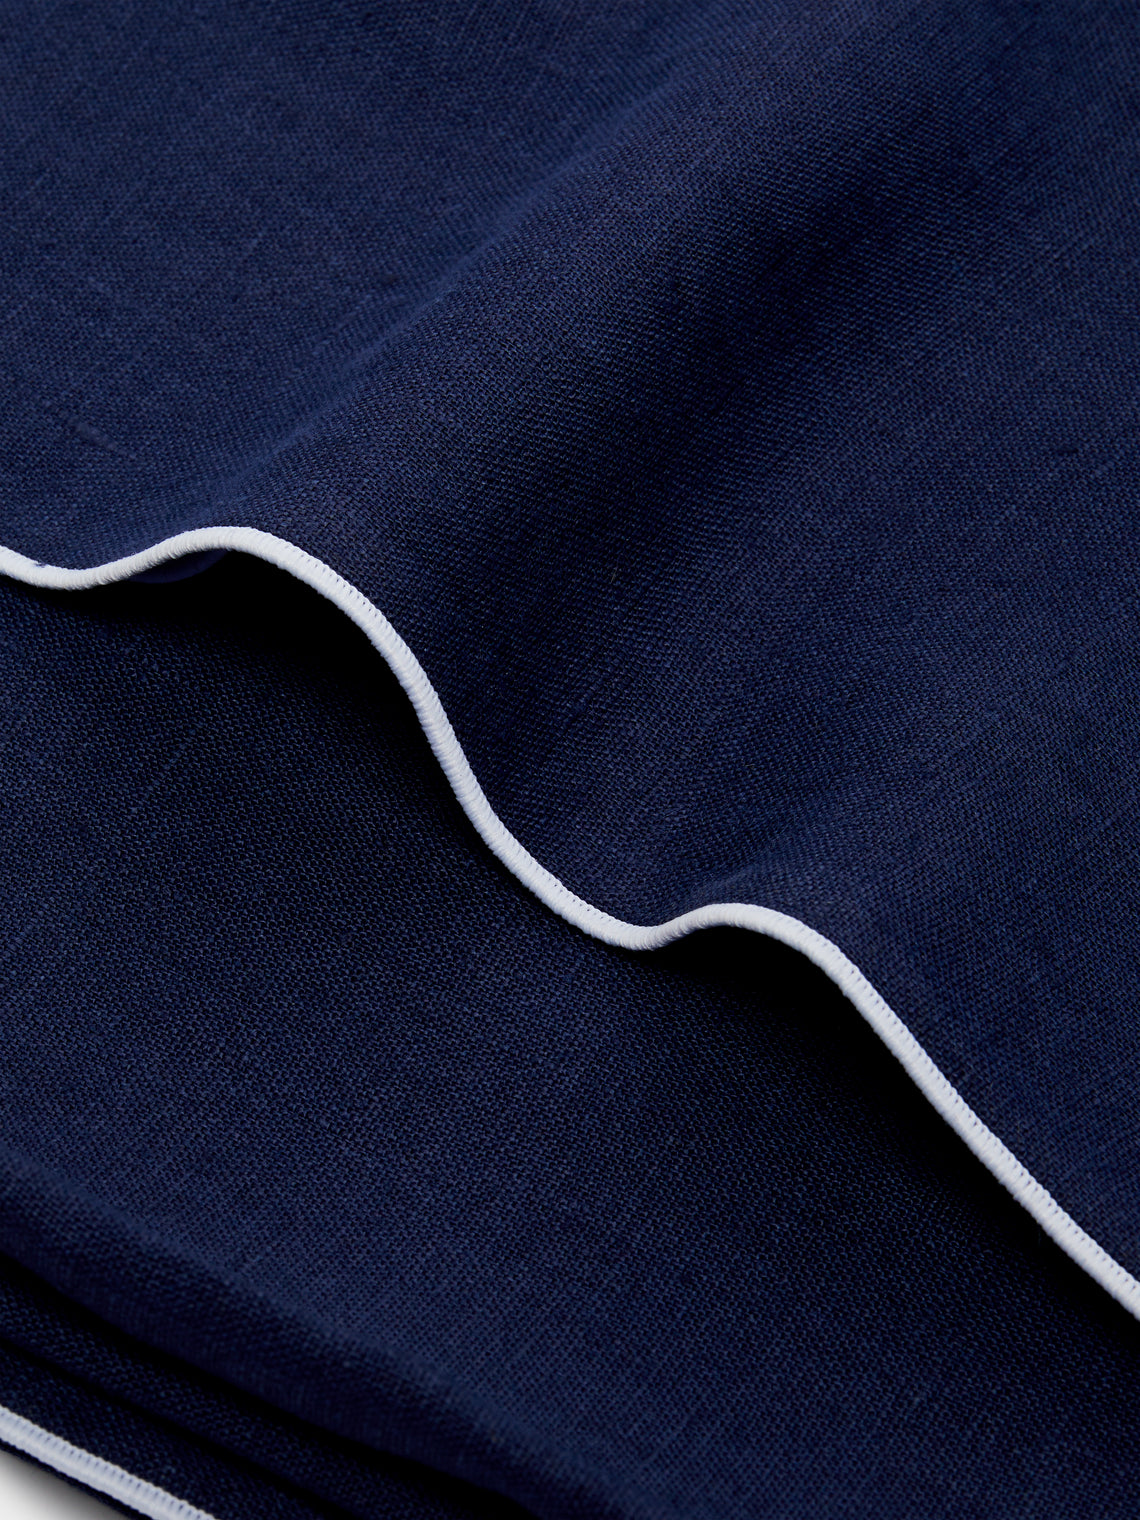 Madre Linen - Contrast Edge Linen Tablecloth - Blue - ABASK